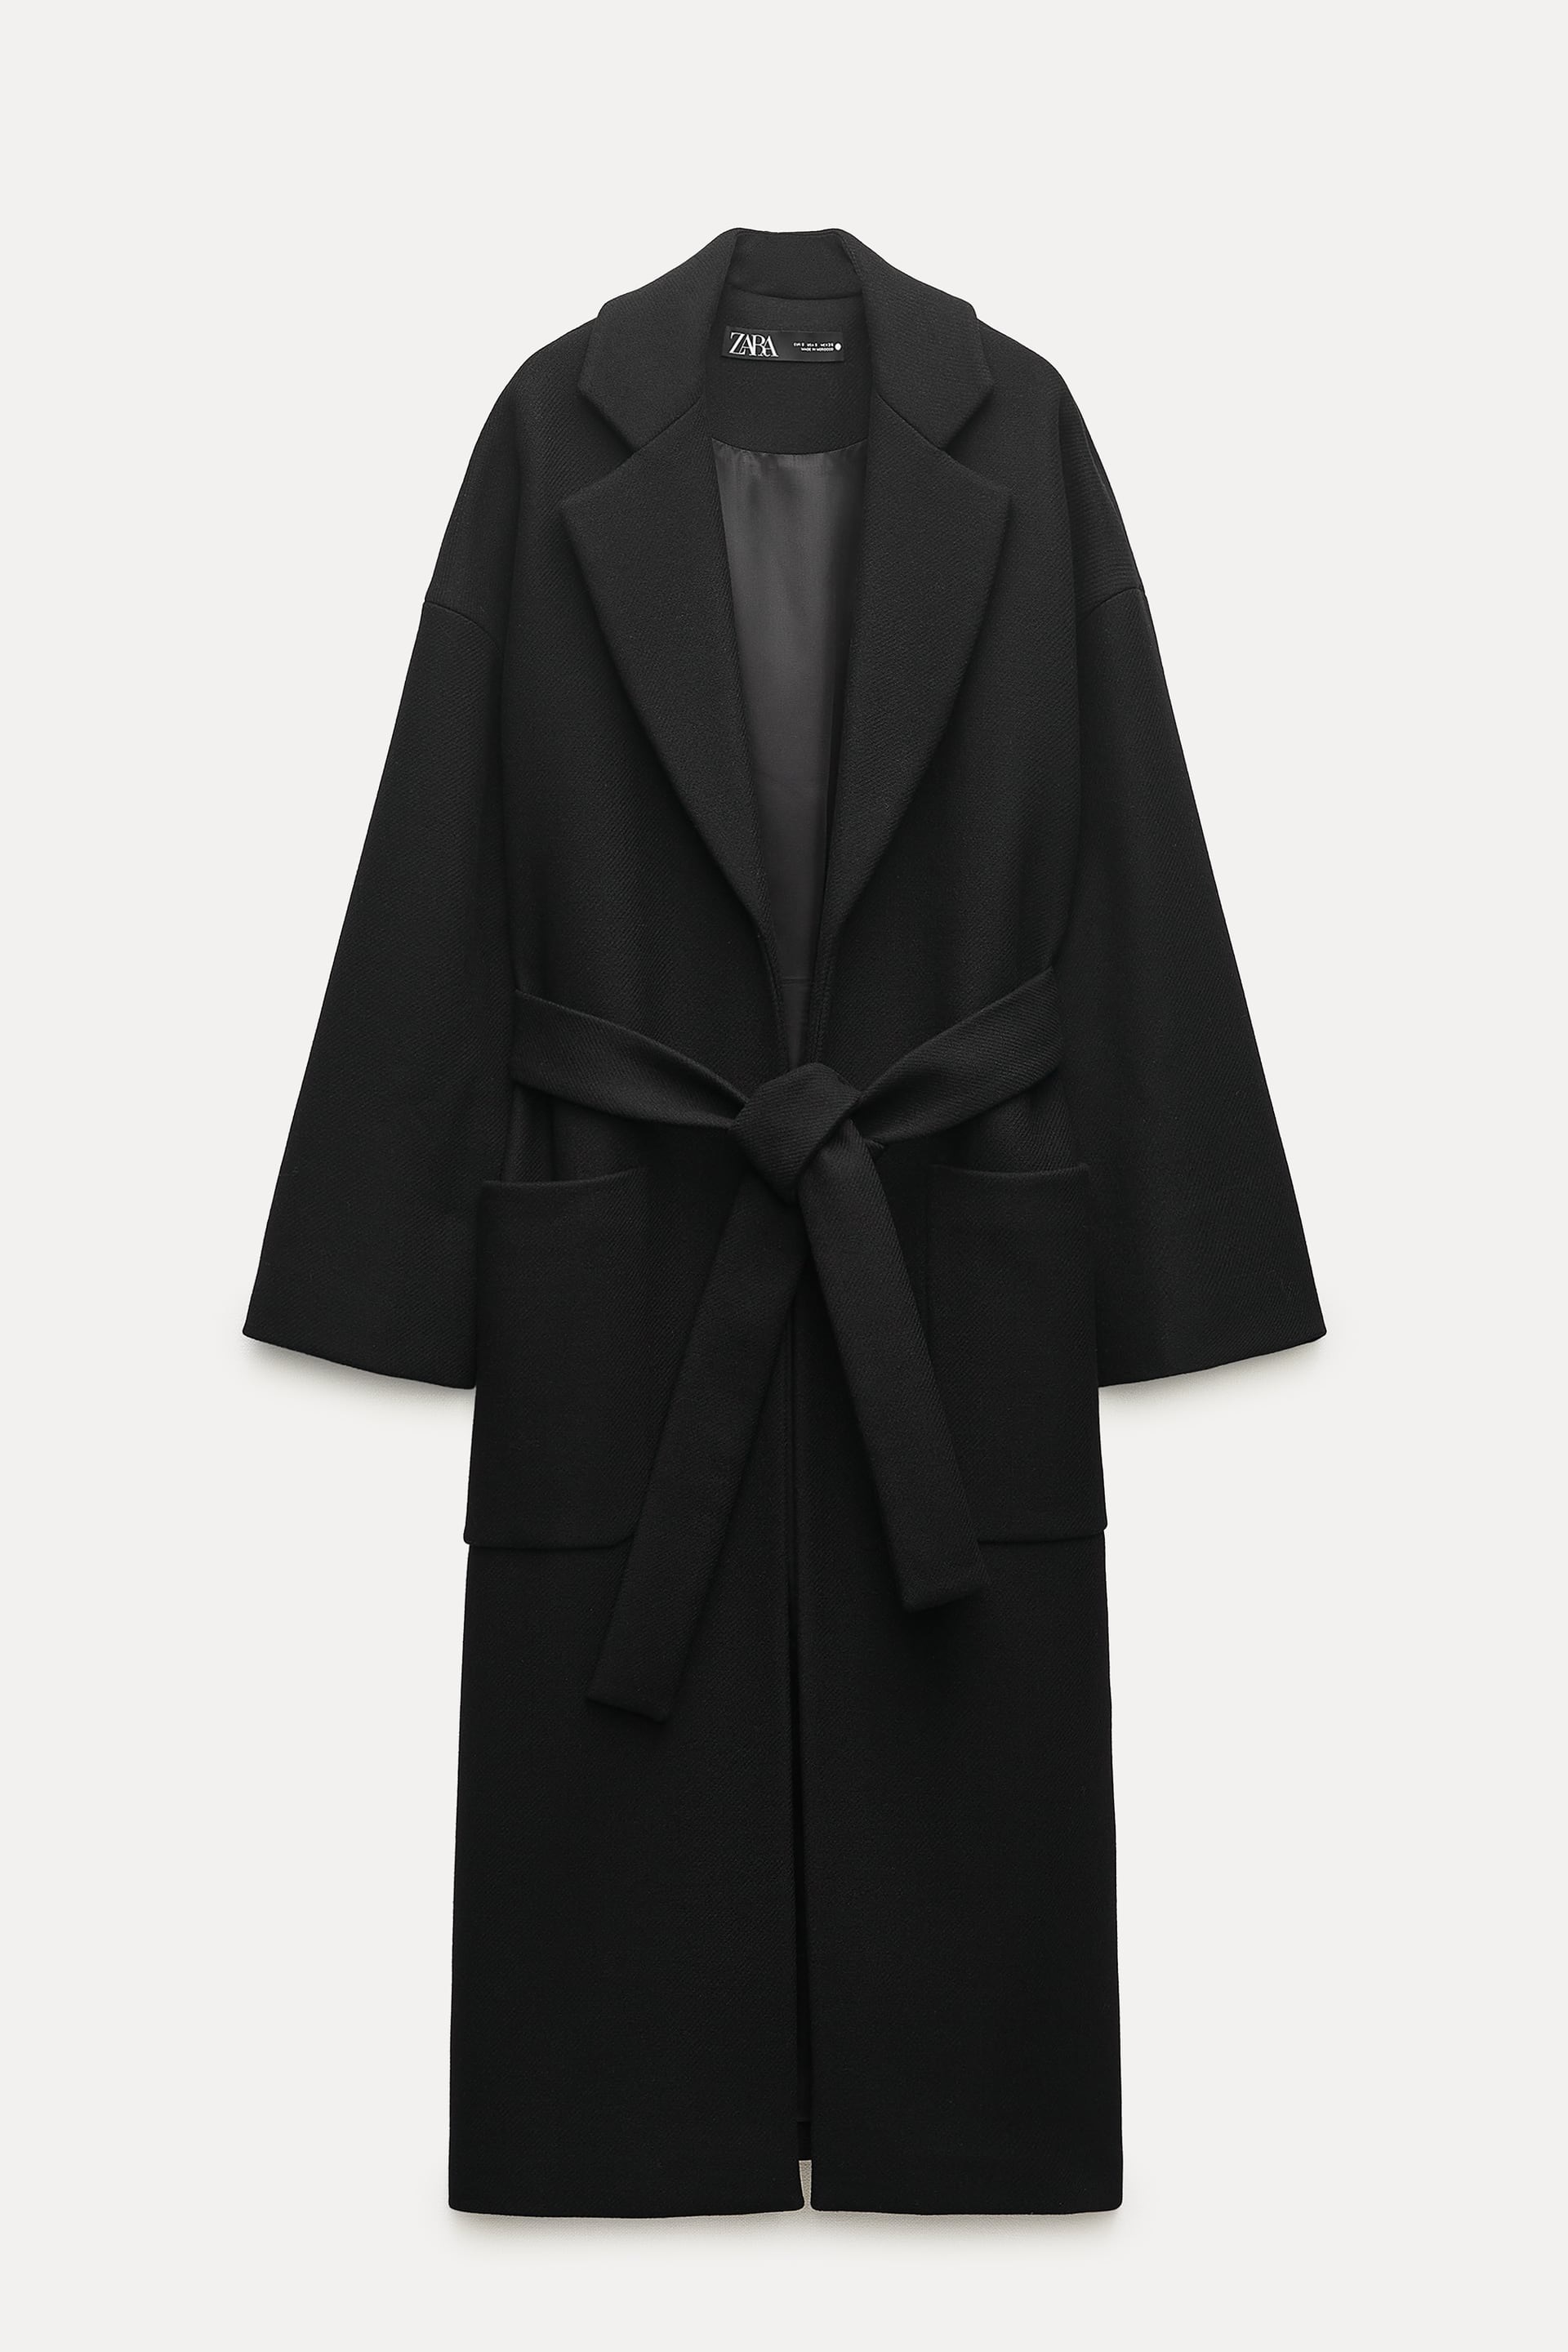 Abrigo bata negro de Zara, el modelo de la reina Letizia que arrasa esta temporada.